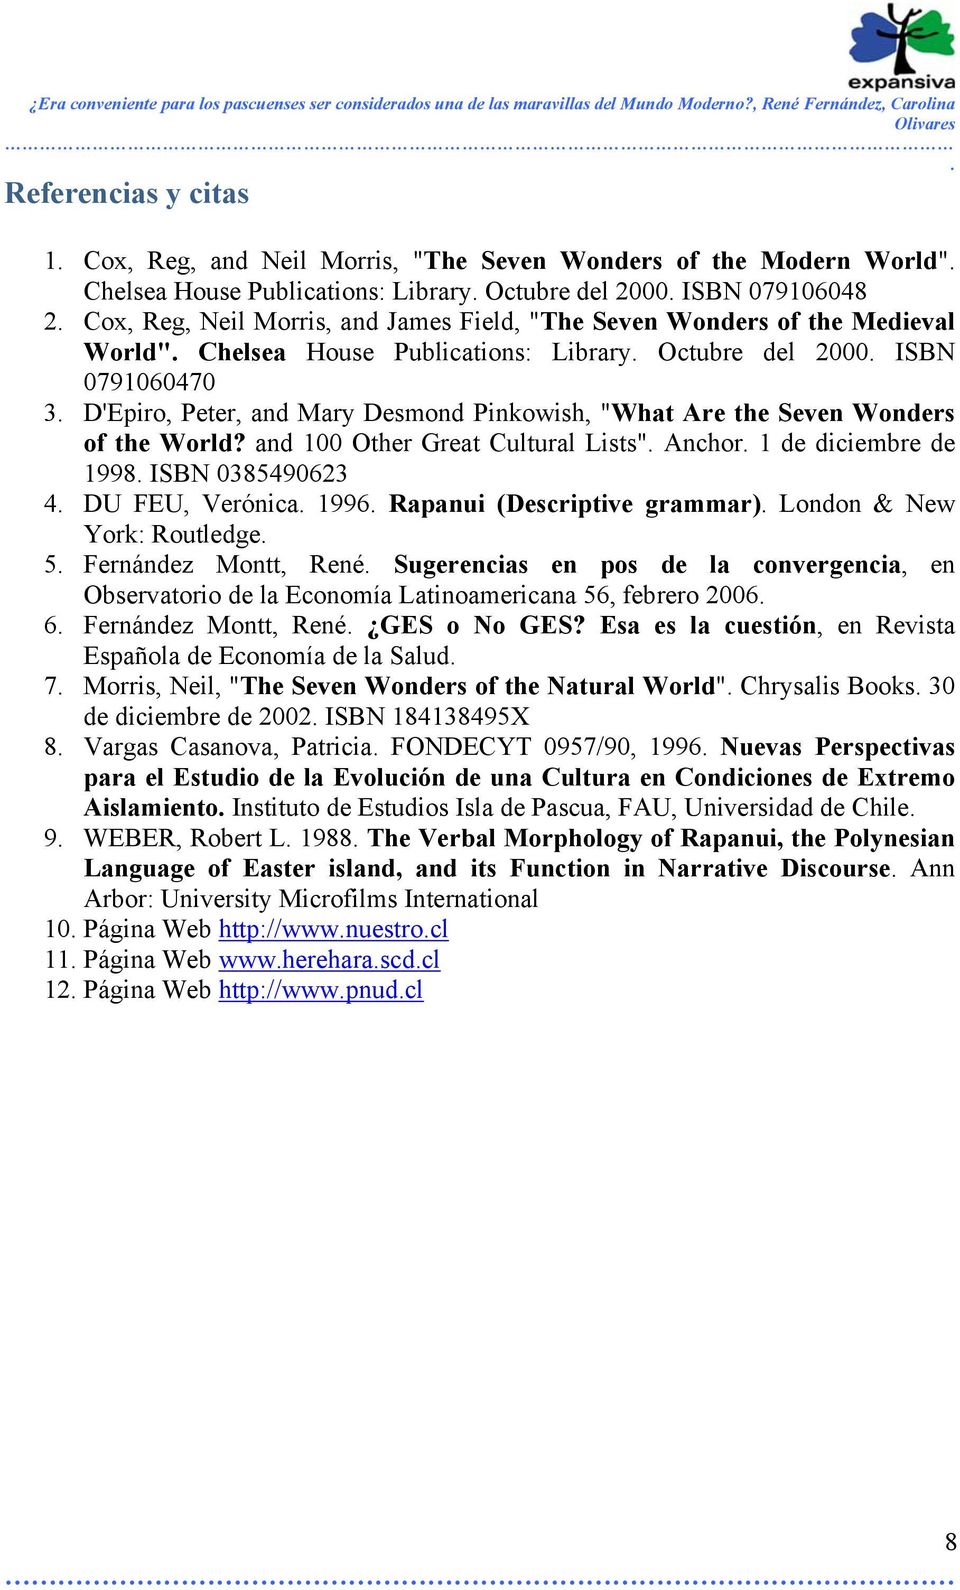 and 100 Other Great Cultural Lists" Anchor 1 de diciembre de 1998 ISBN 0385490623 4 DU FEU, Verónica 1996 Rapanui (Descriptive grammar) London & New York: Routledge 5 Fernández Montt, René